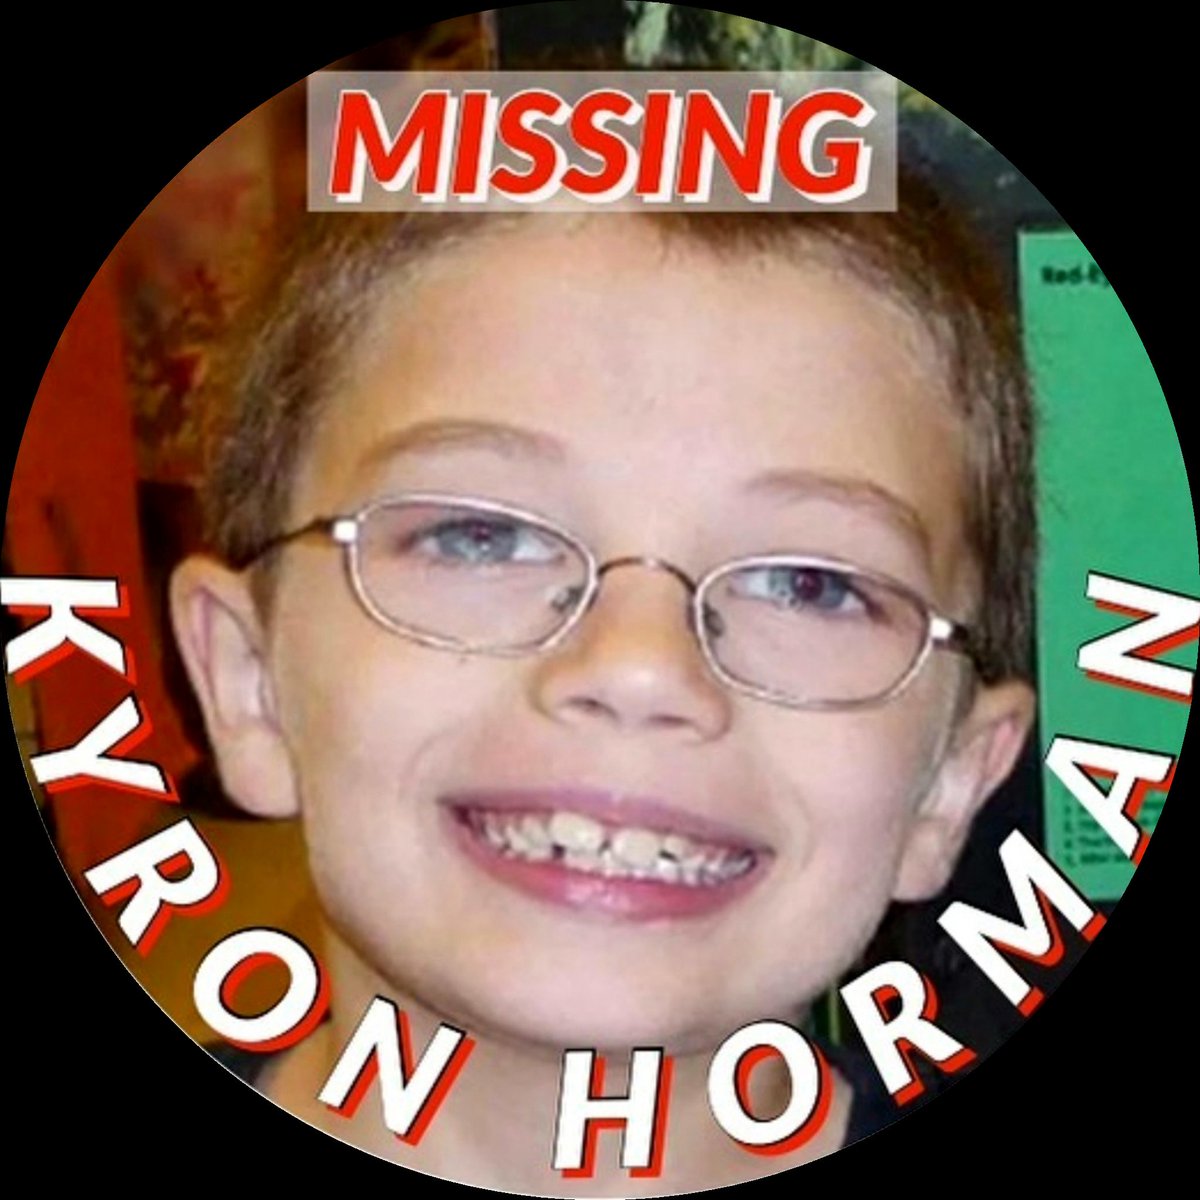 #MissingKyronHorman
#HELP #FindKyron
#JusticeForKyron
#KyronHorman
@pinkspiritgirl
#PleaseShare
#MISSING
ᴛʜʀᴇᴀᴅ ↑↓
#JusticeForKyronHorman
ɪɴꜱᴛᴀɢʀᴀᴍ ↓
instagram.com/justiceforkyro…